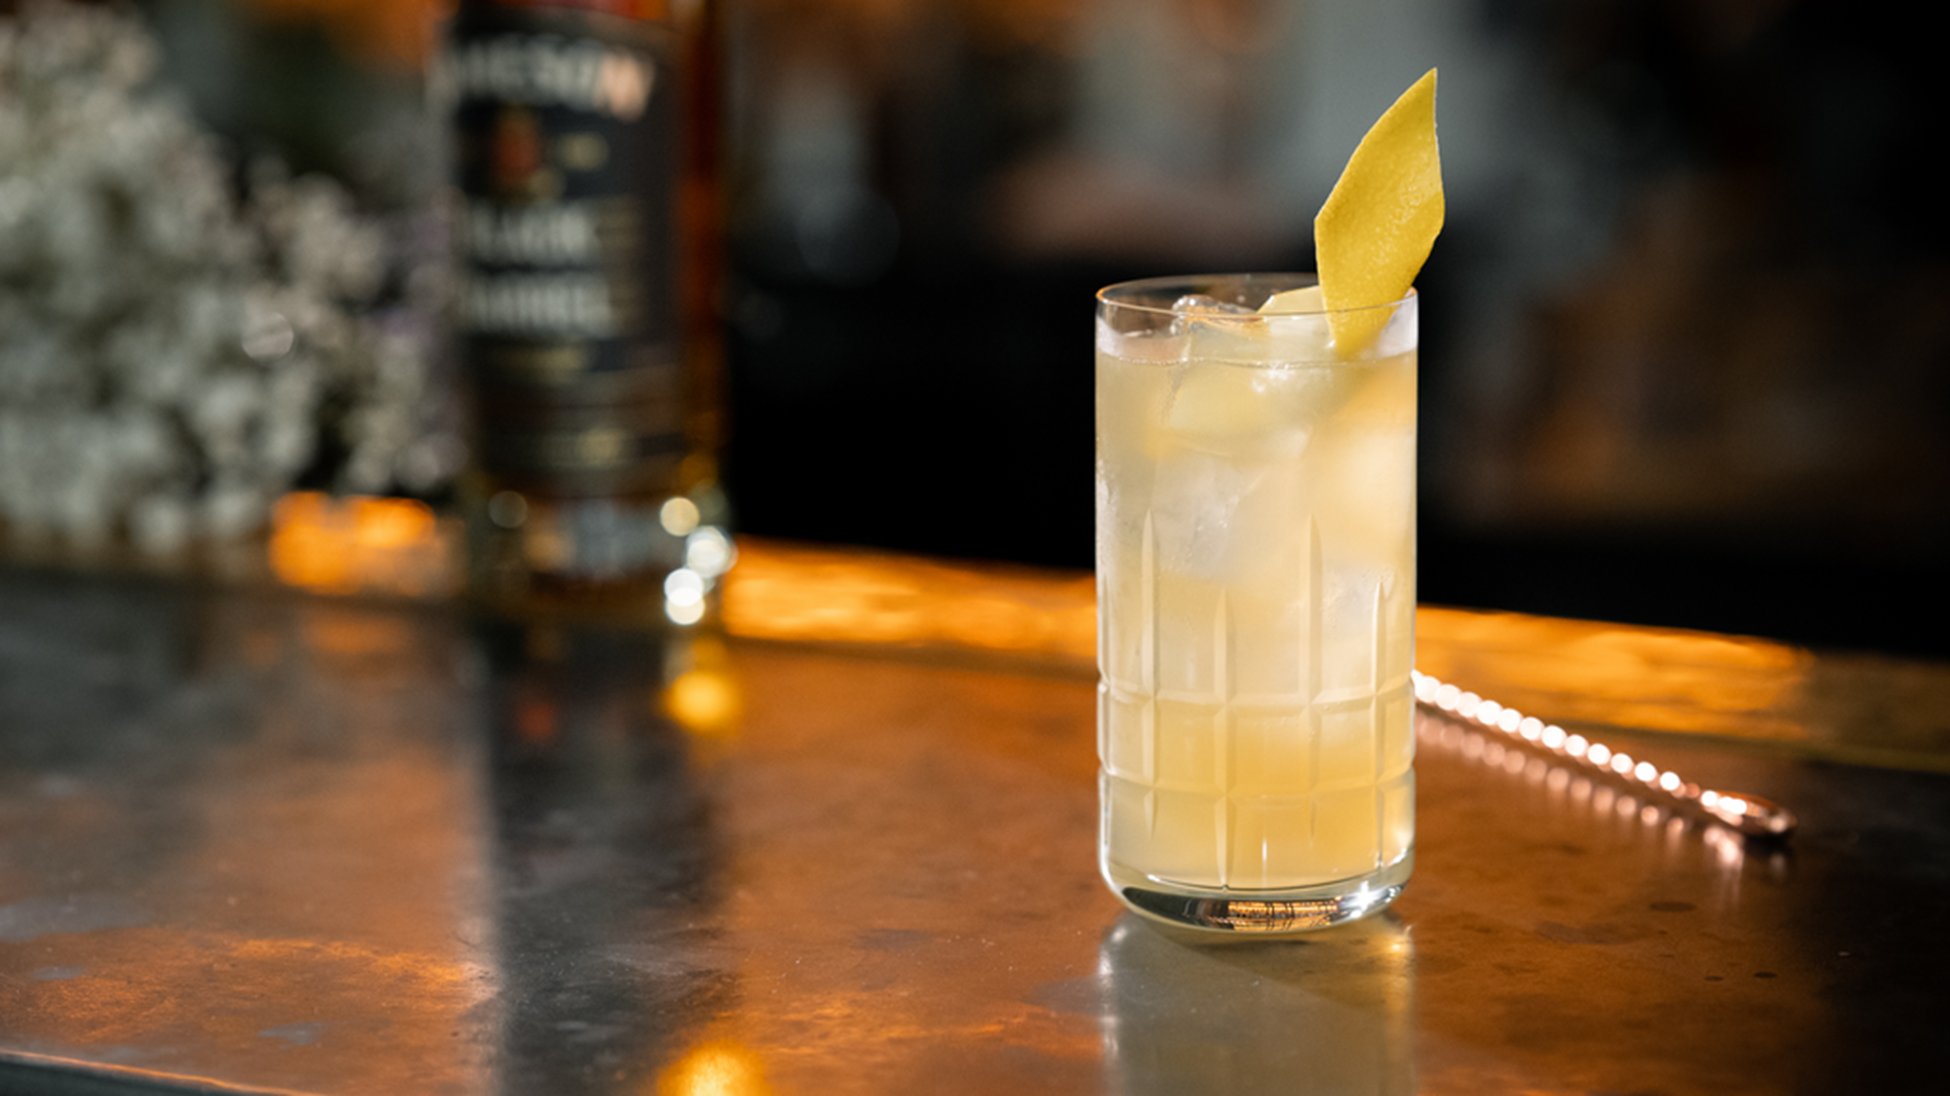 irish lemonade cocktail with a lemon spiral garnish